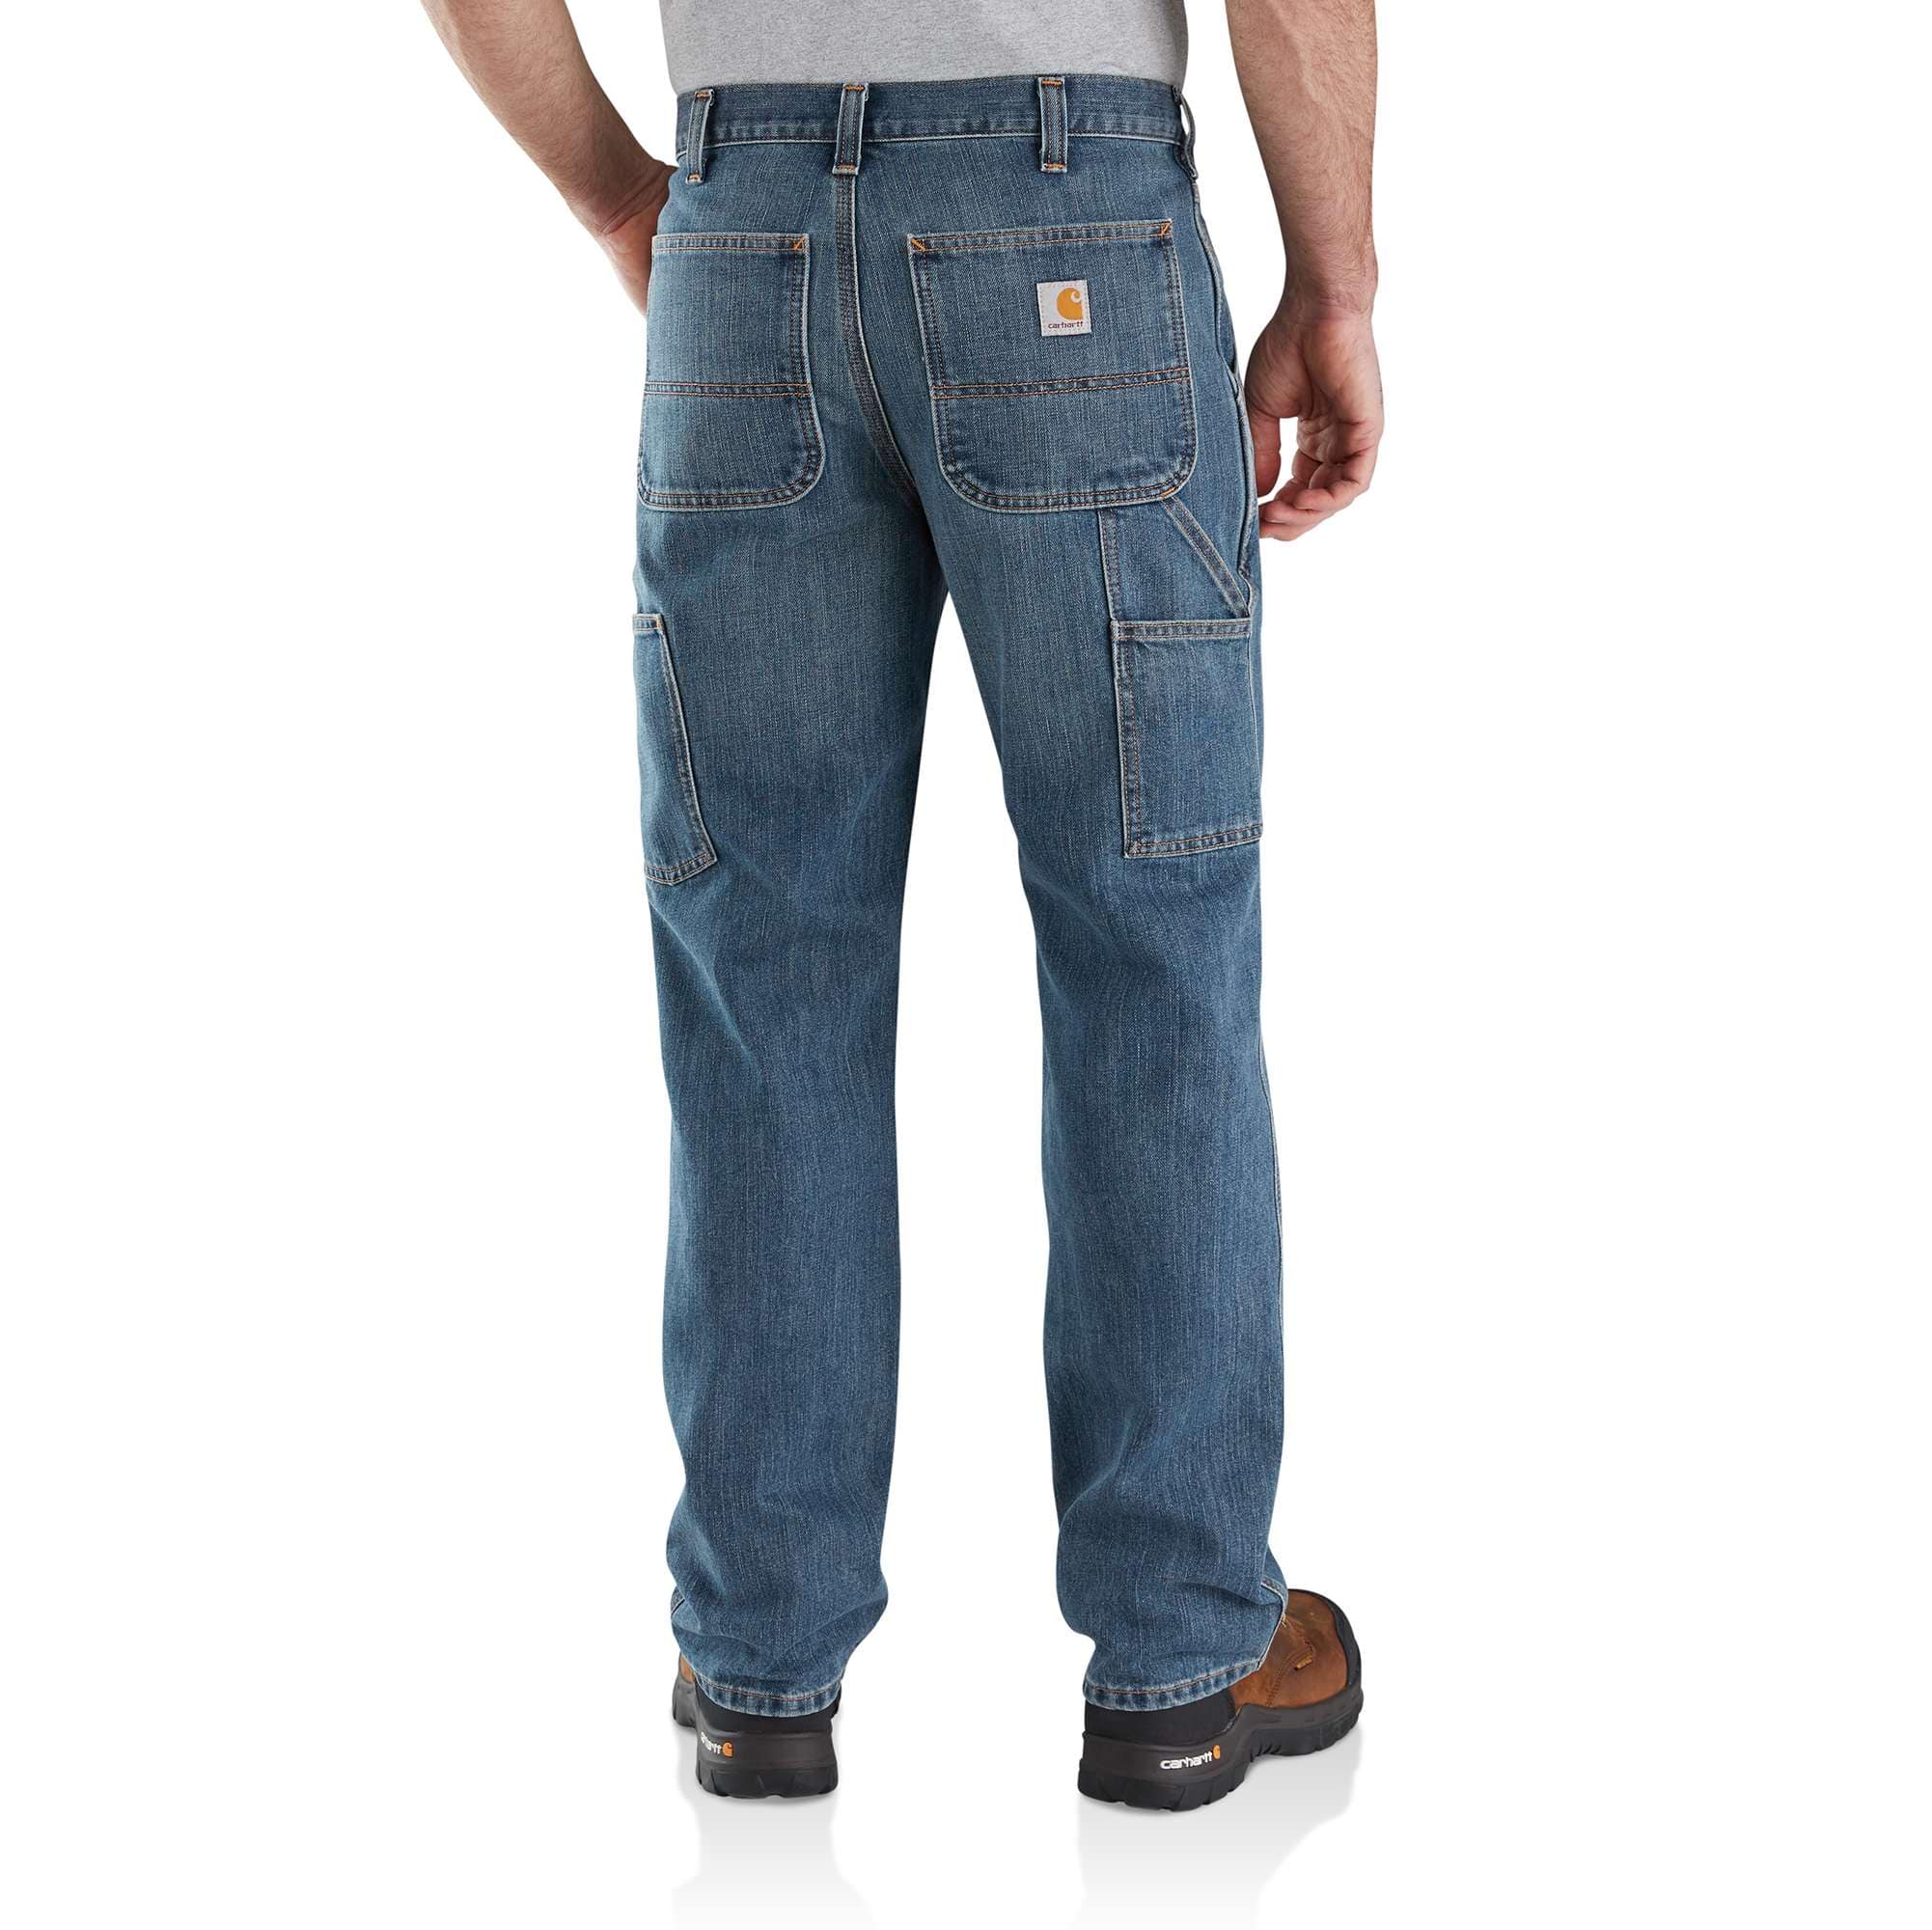 carhartt dungaree jeans